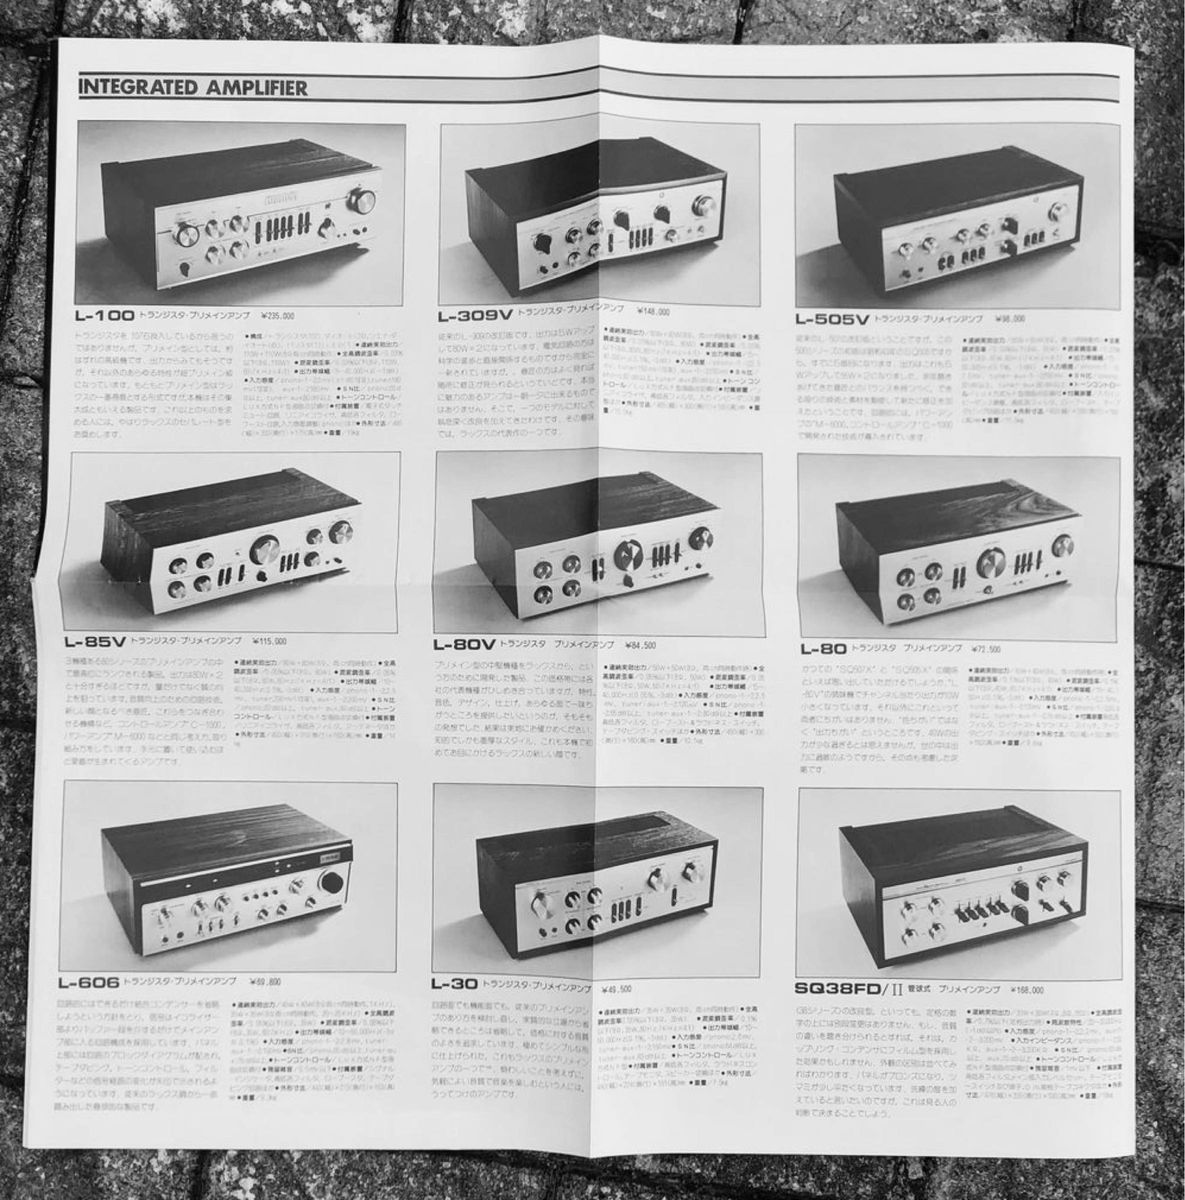 Lux(luxman) 創業50周年オーディオ機器カタログ、昭和40年代後半。